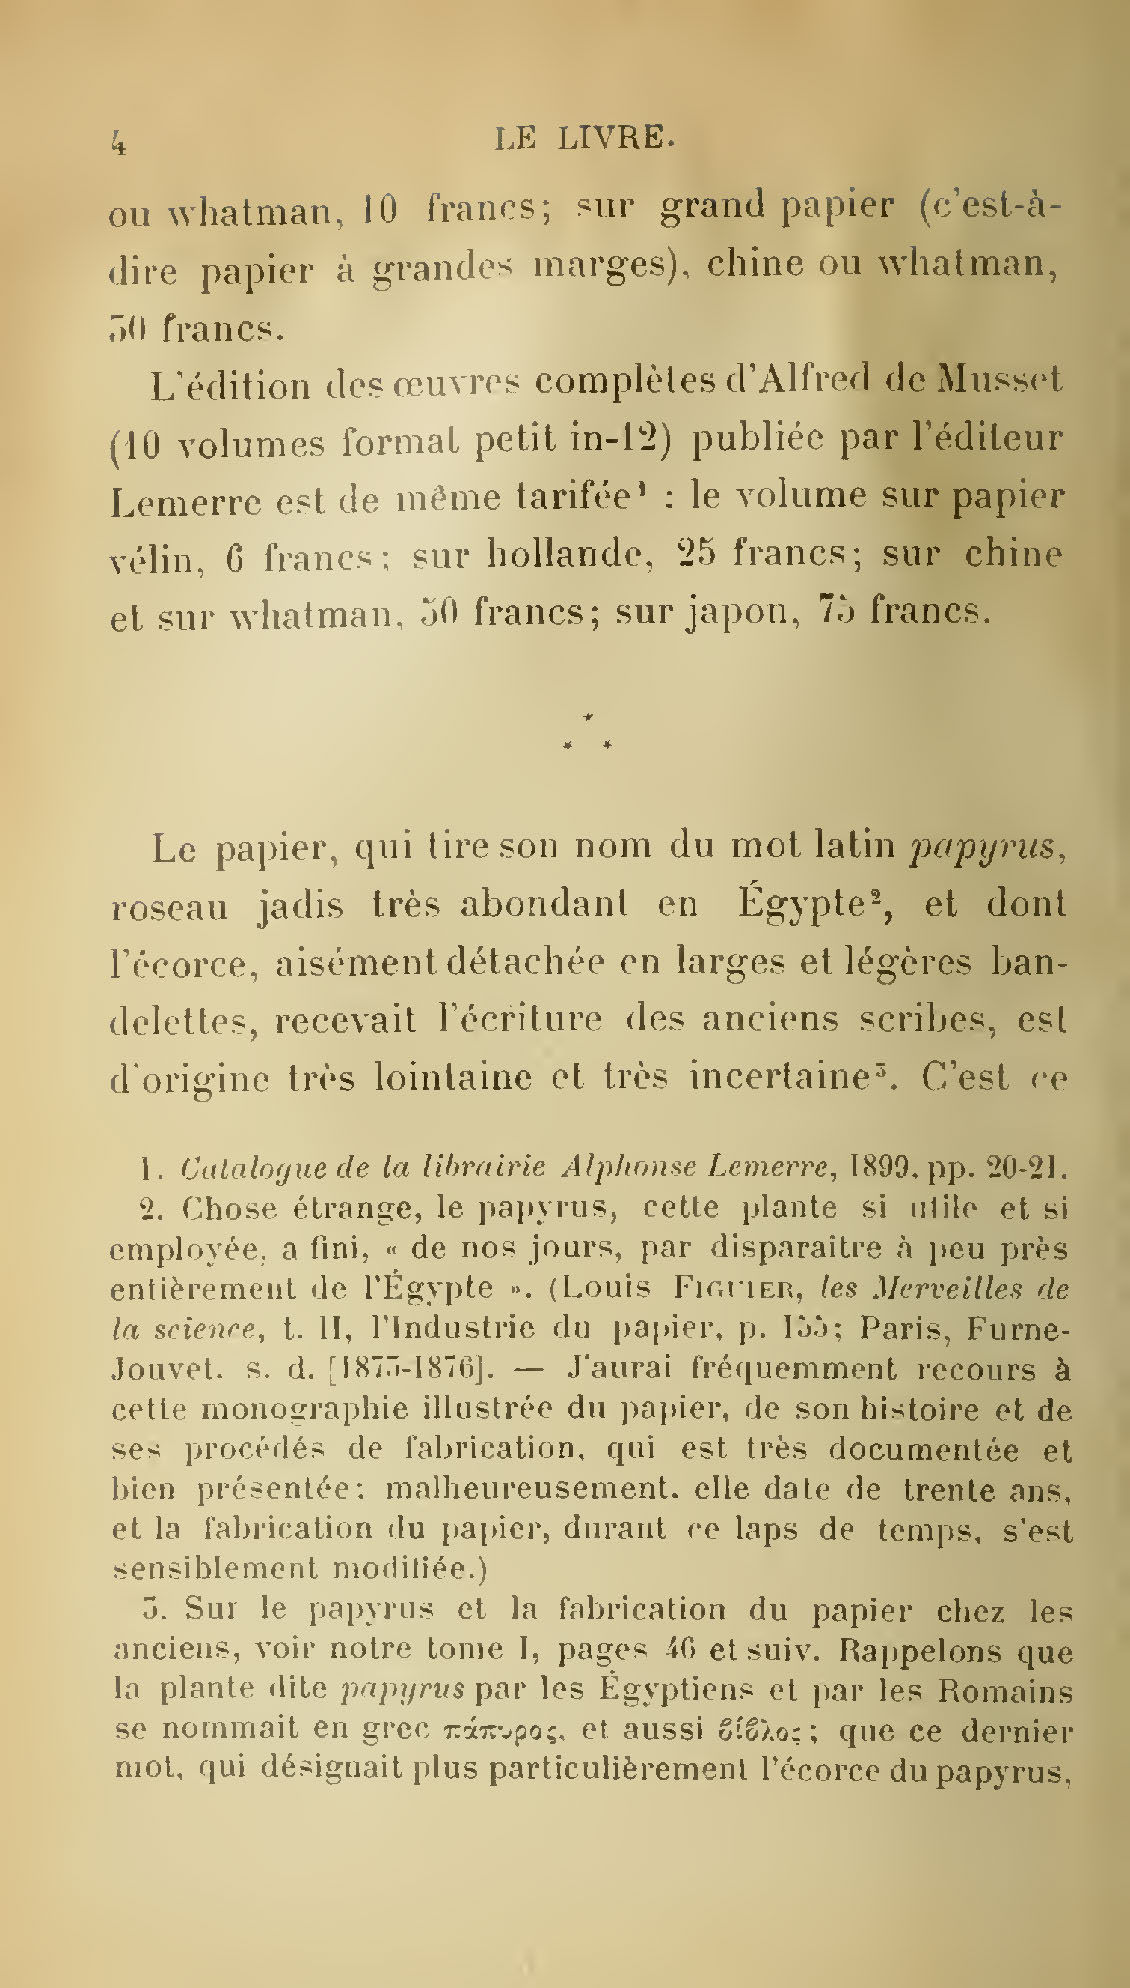 Albert Cim, Le Livre, t. III, p. 4.